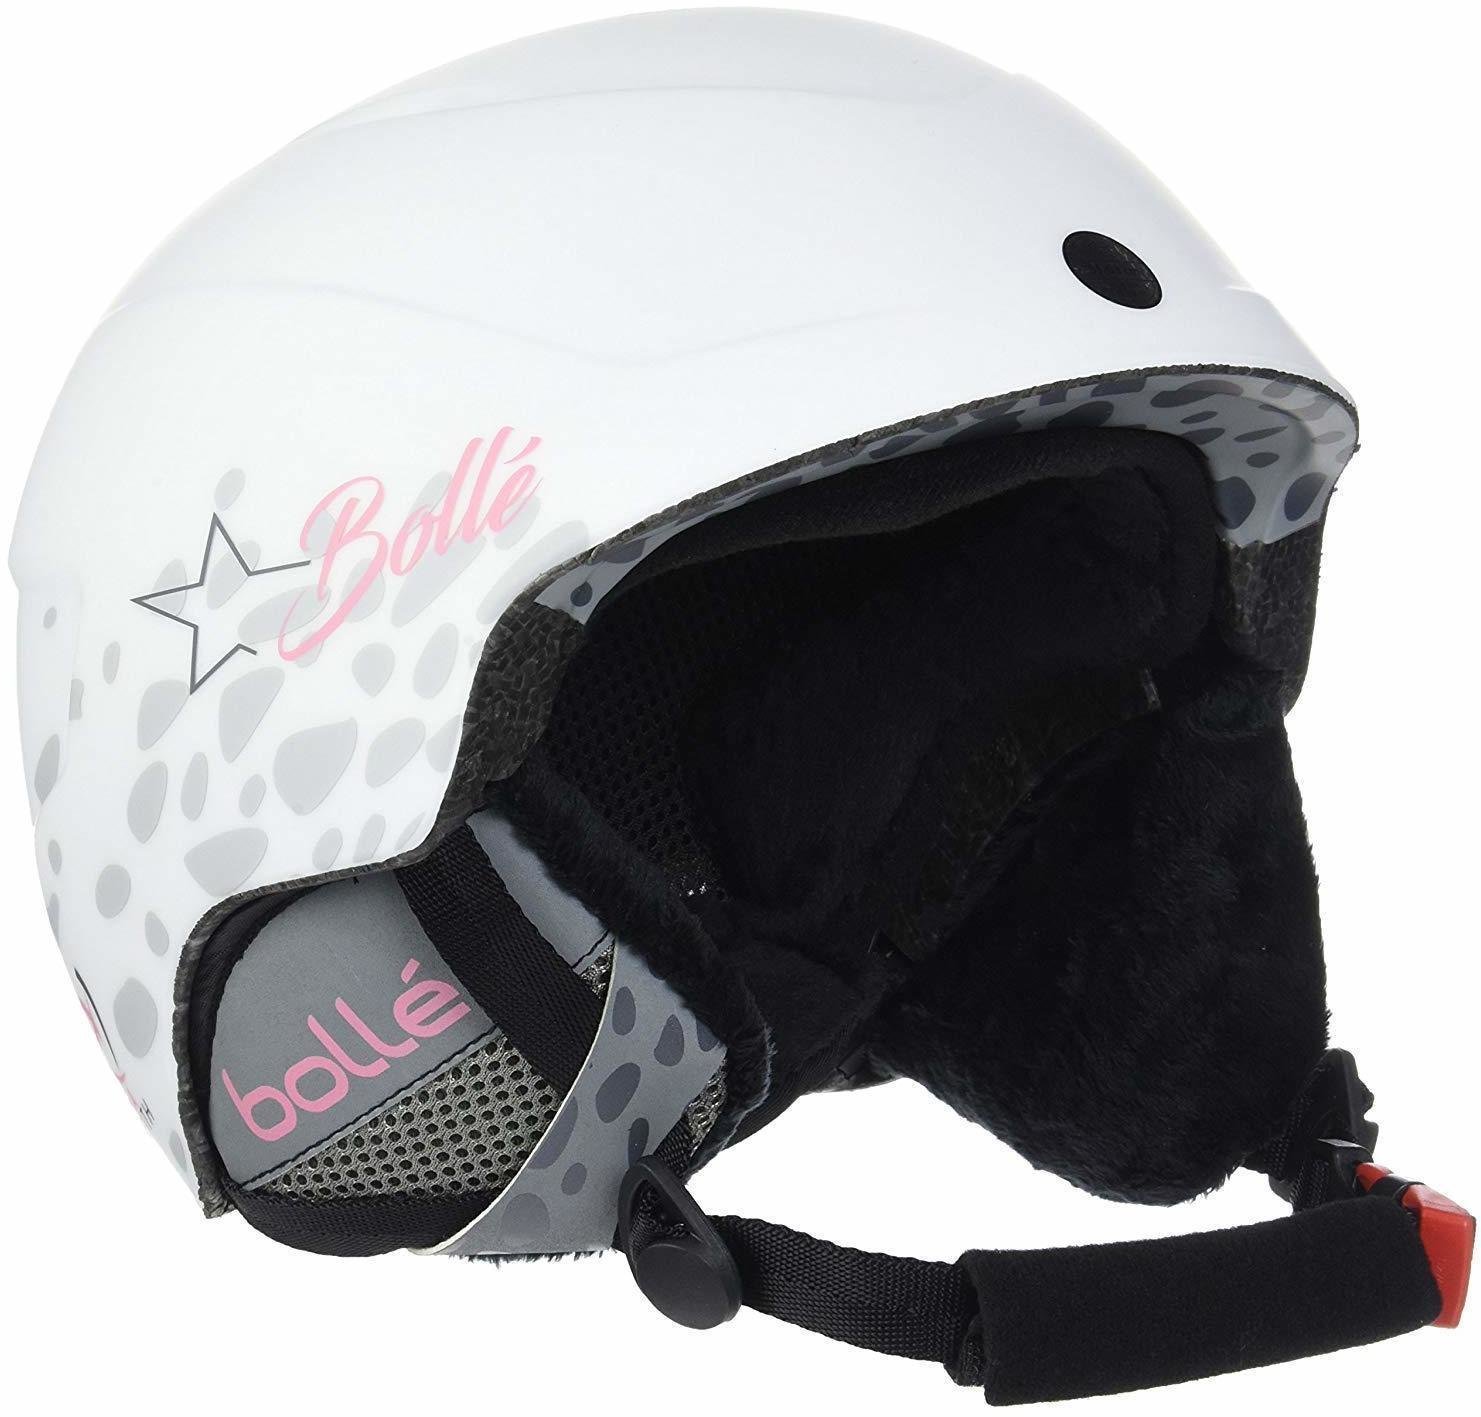 Ski Helmet Bollé B-Lieve Anna Veith Signature Series 53-58 cm 17/18 Junior